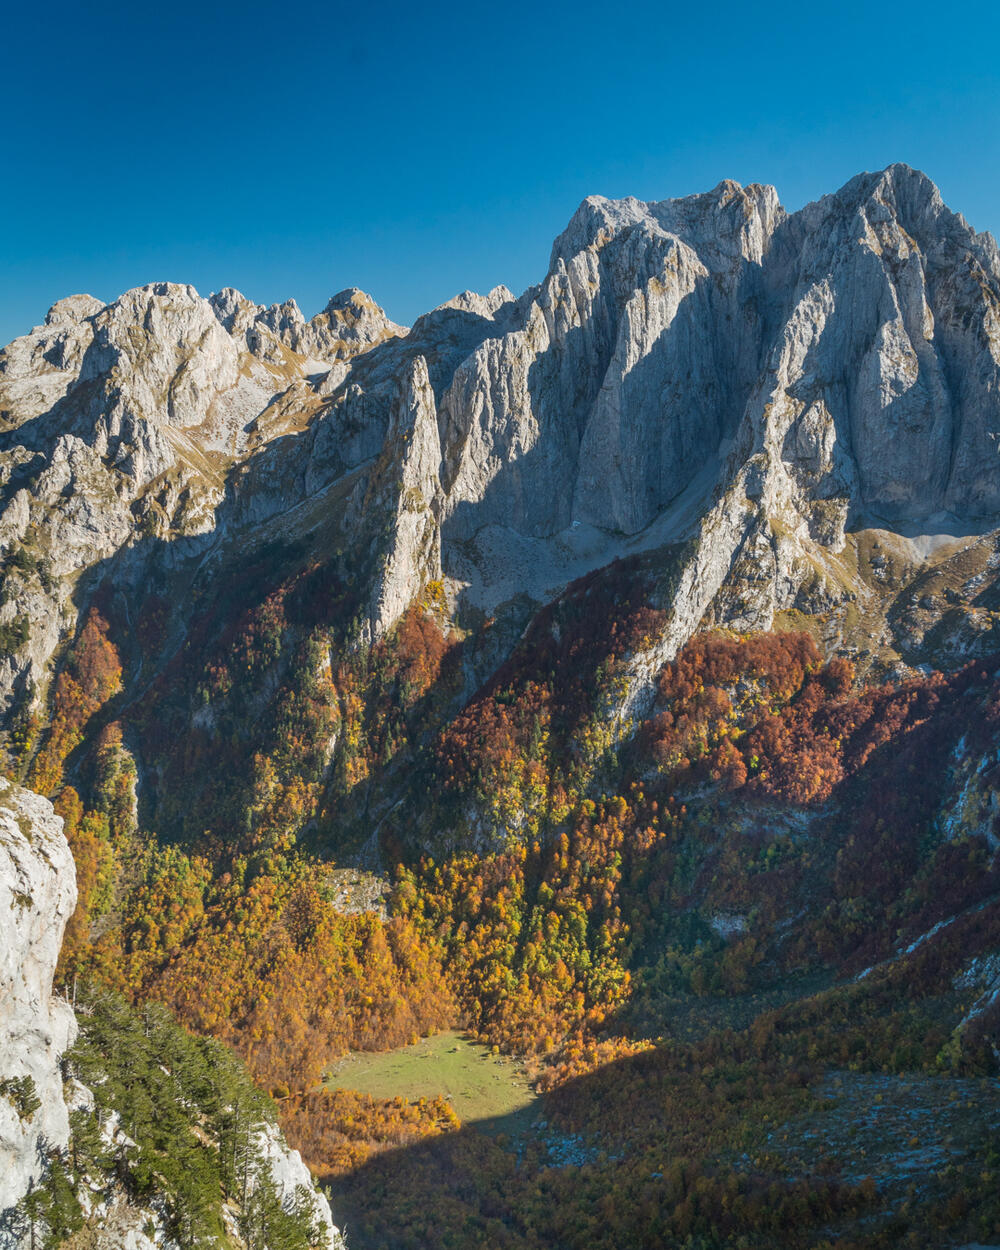 Prokletije mountains have highest peak in Montenegro